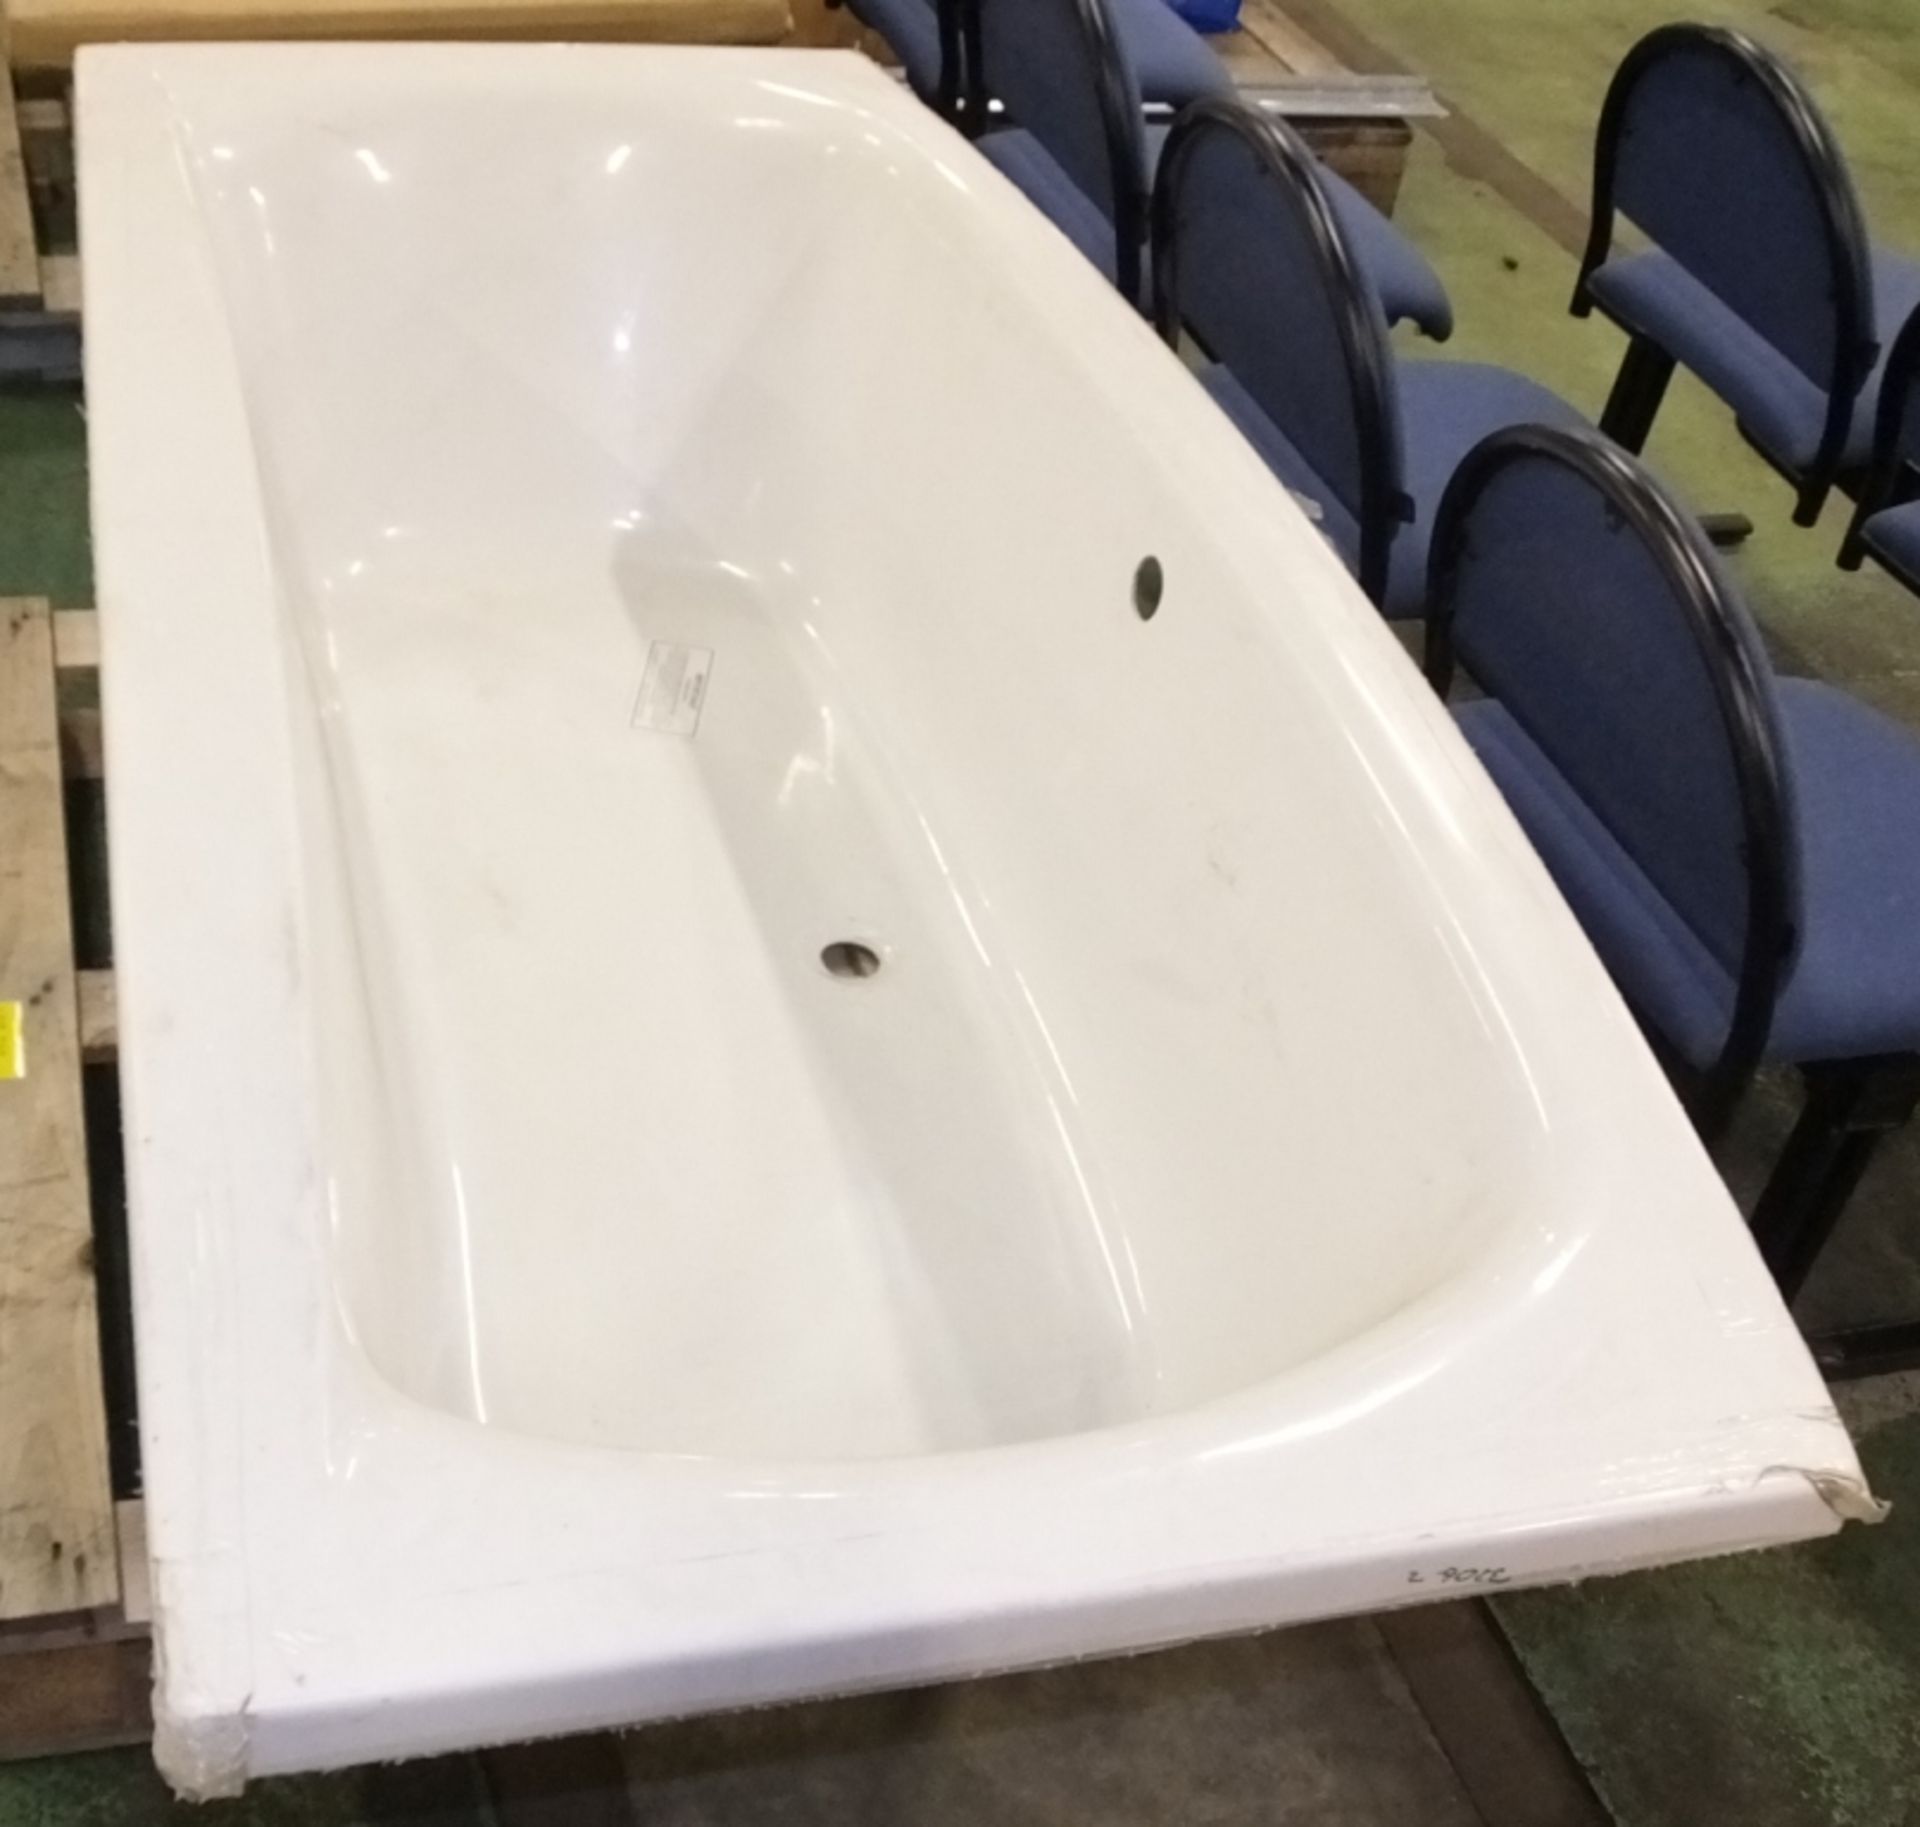 Nuova Bath 190x90cm White - Image 3 of 3